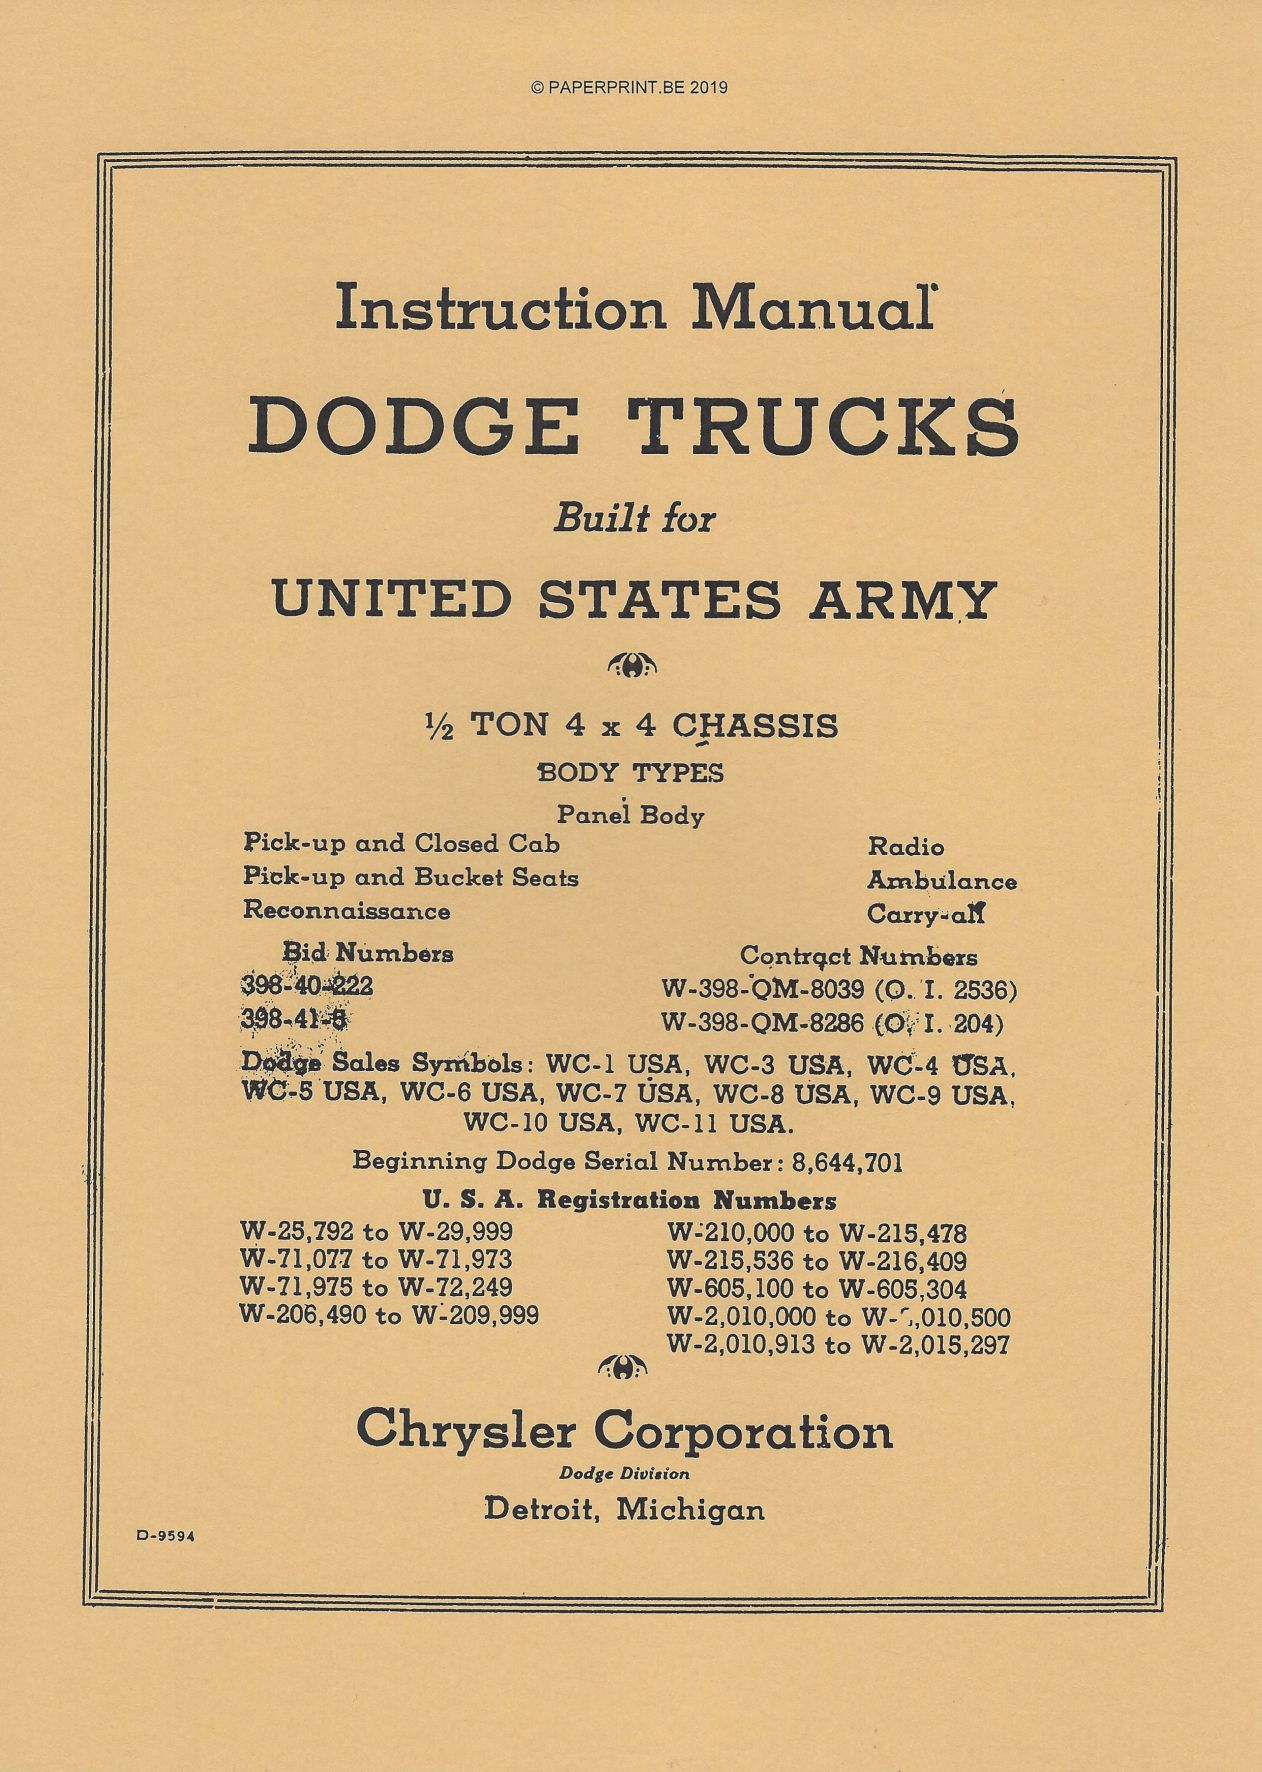 DODGE ½ TON 4x4 1940 INSTRUCTION MANUAL